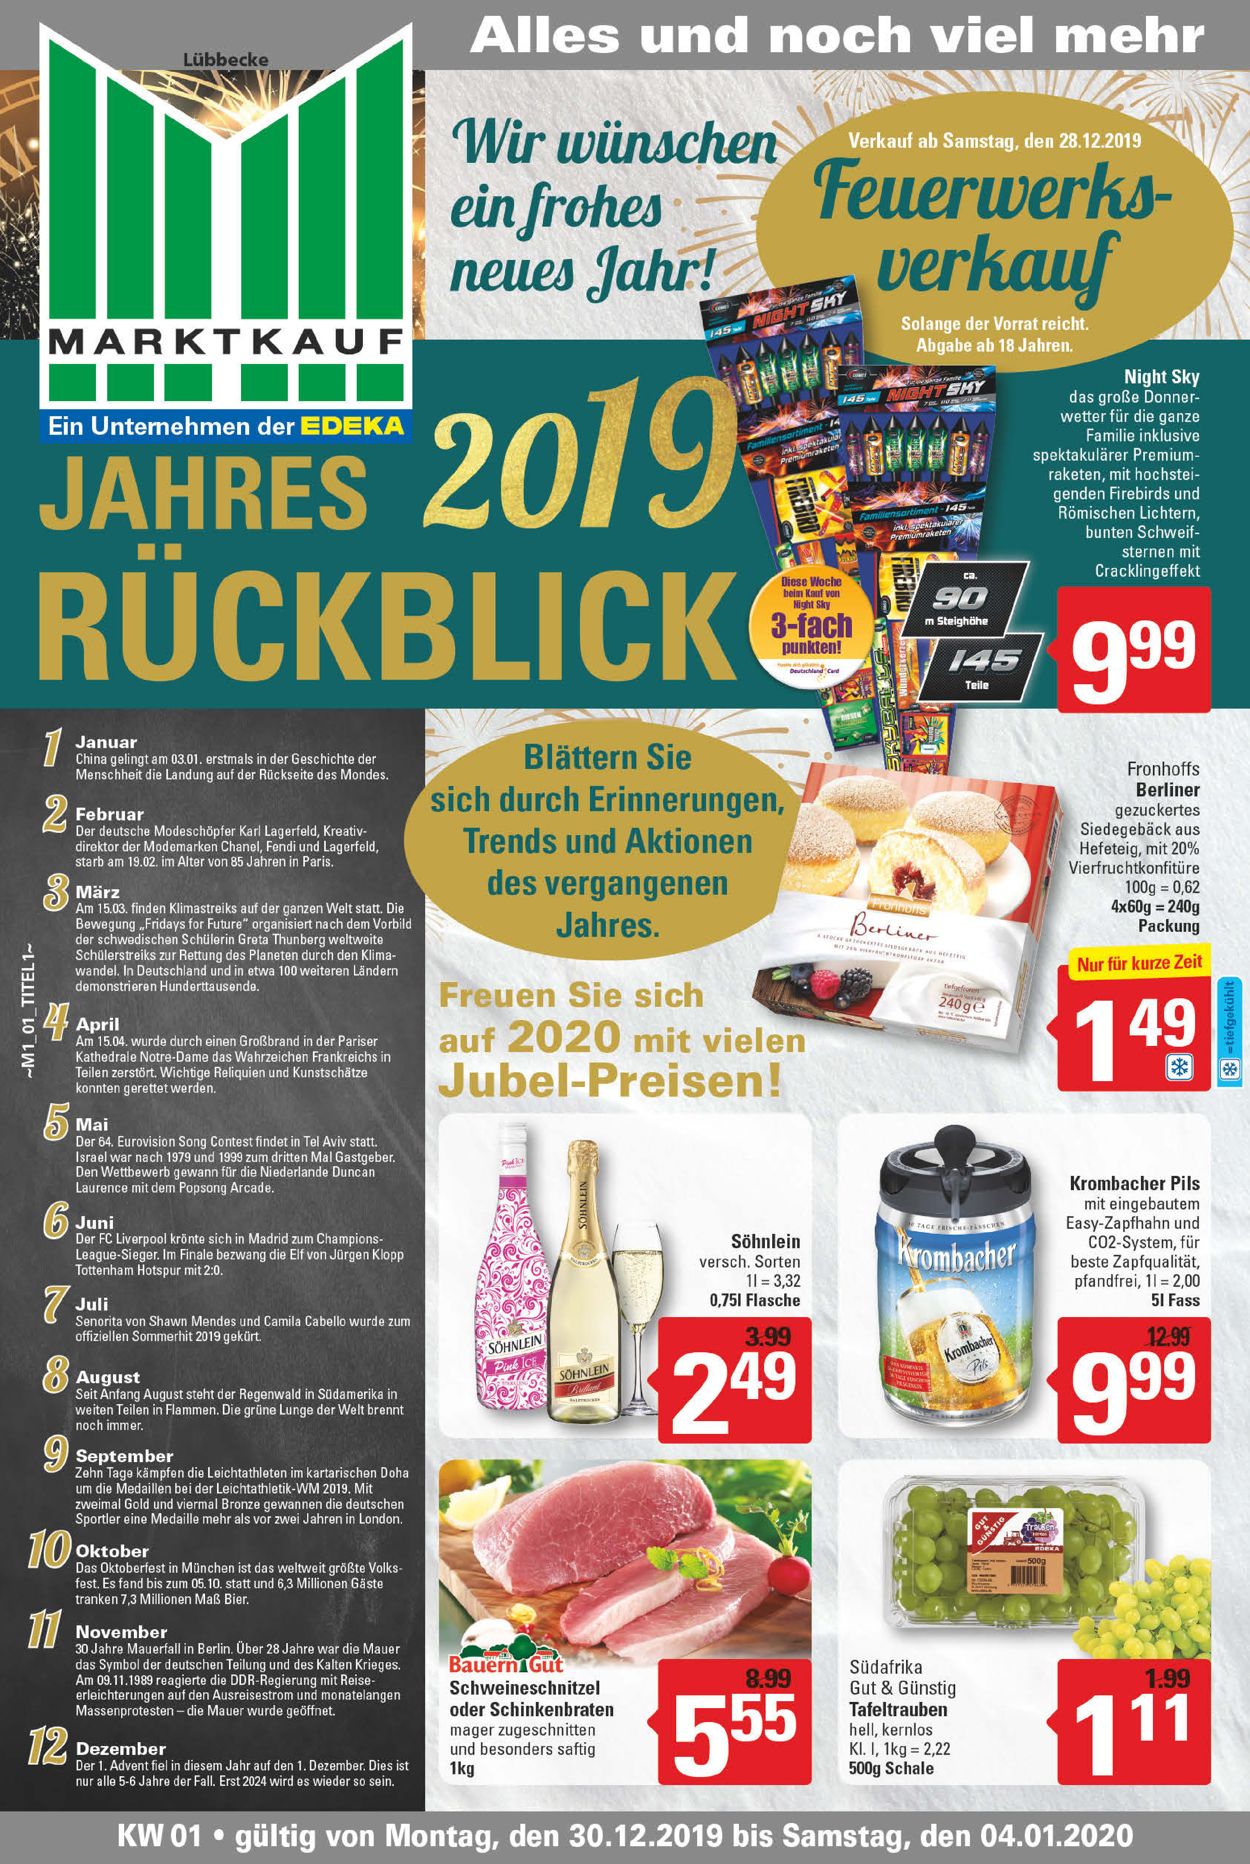 Prospekt Marktkauf -Silvester Prospekt 2019/2020 vom 30.12.2019